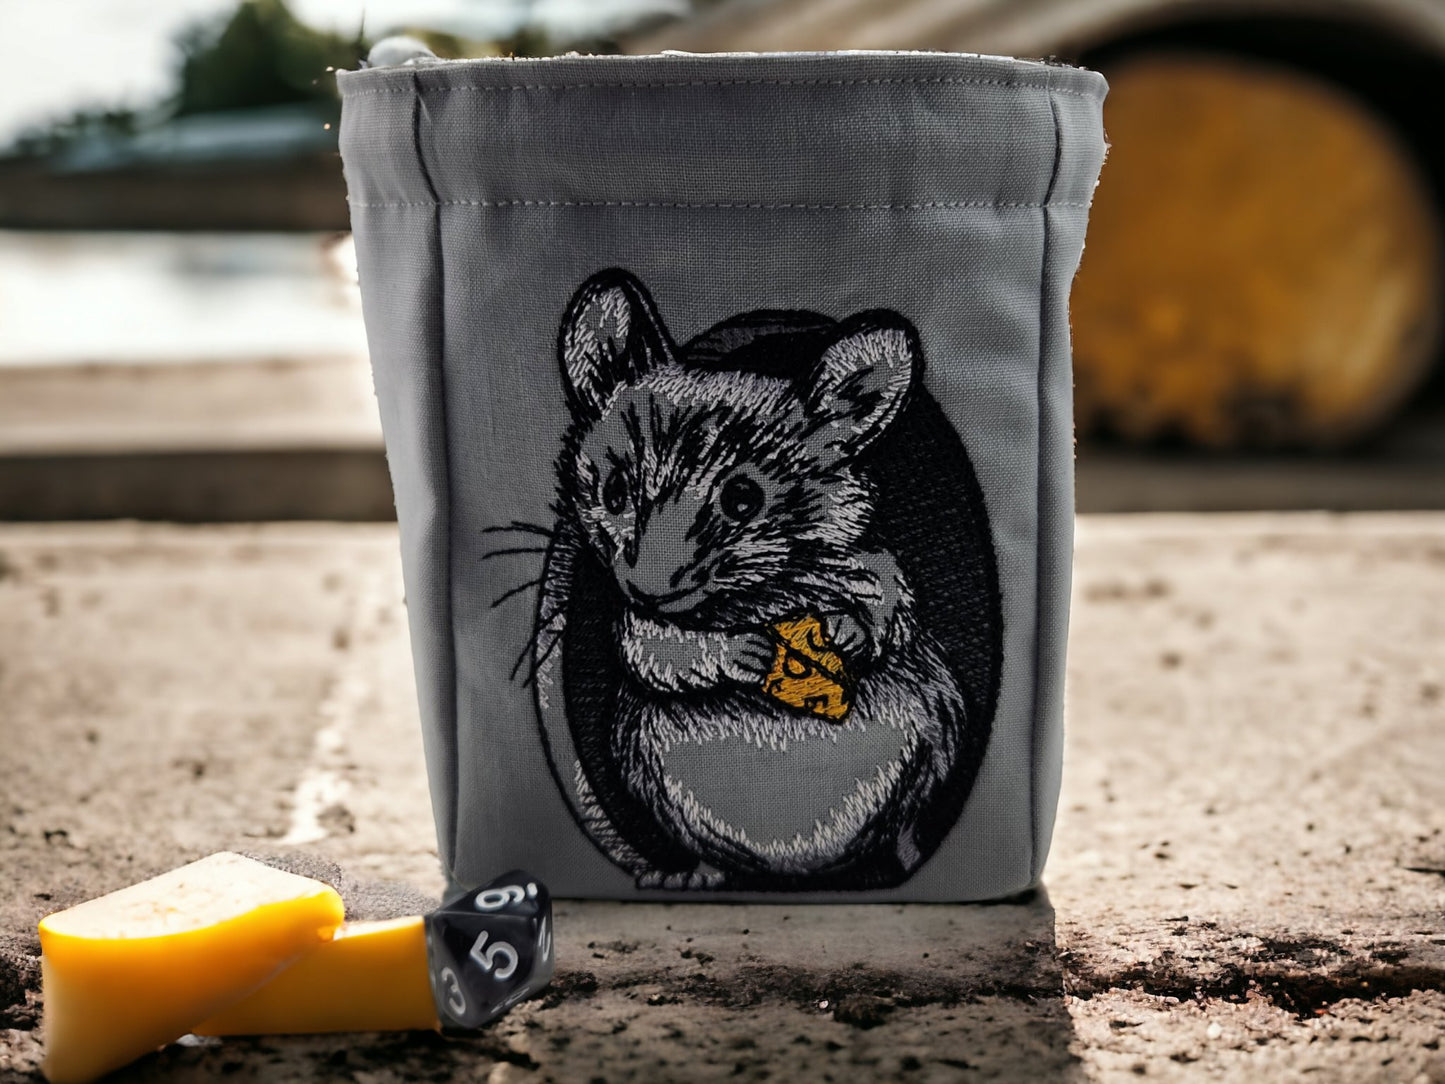 Mouse Dice Bag - Rowan Gate